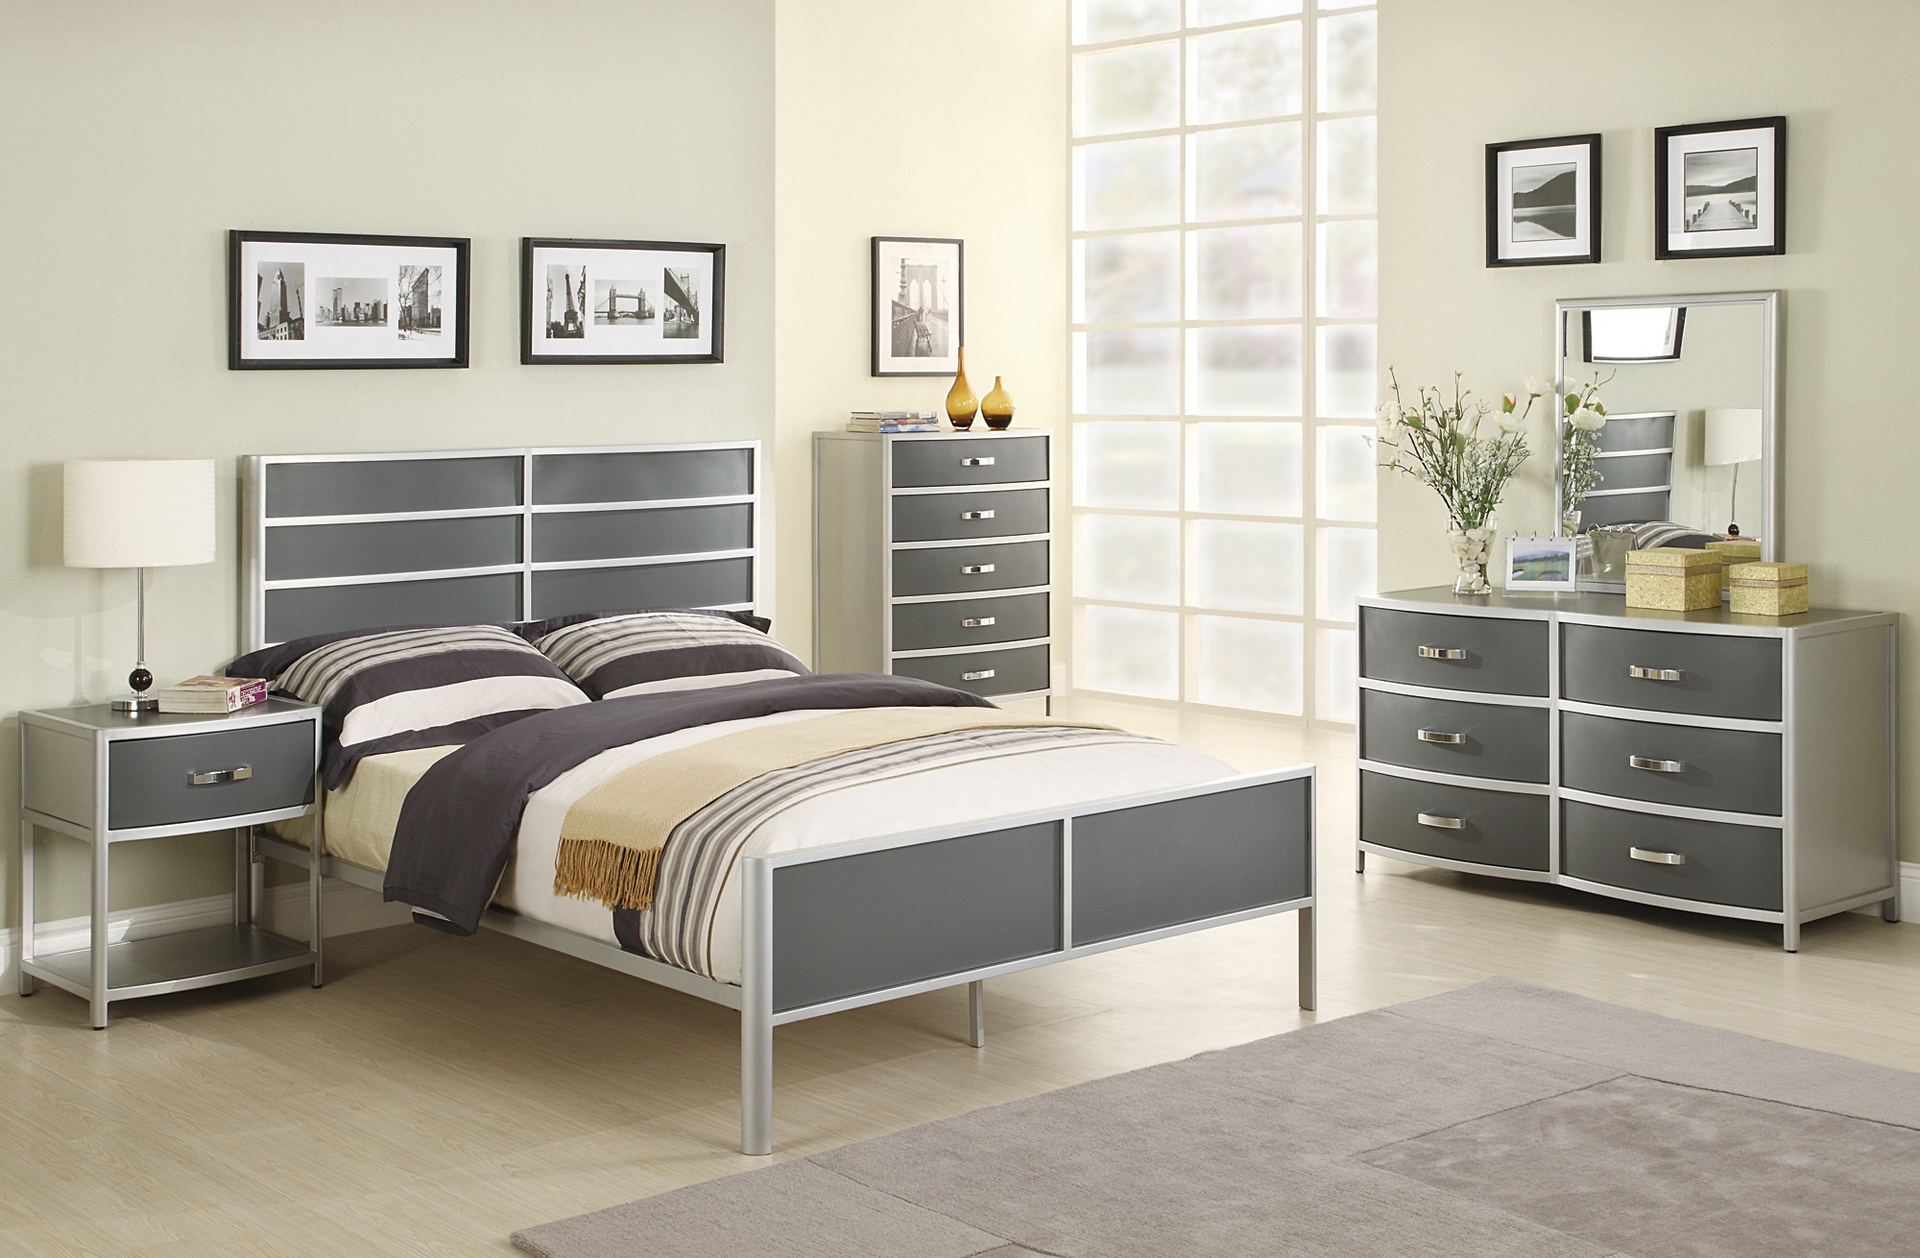 silver handles for bedroom furniture